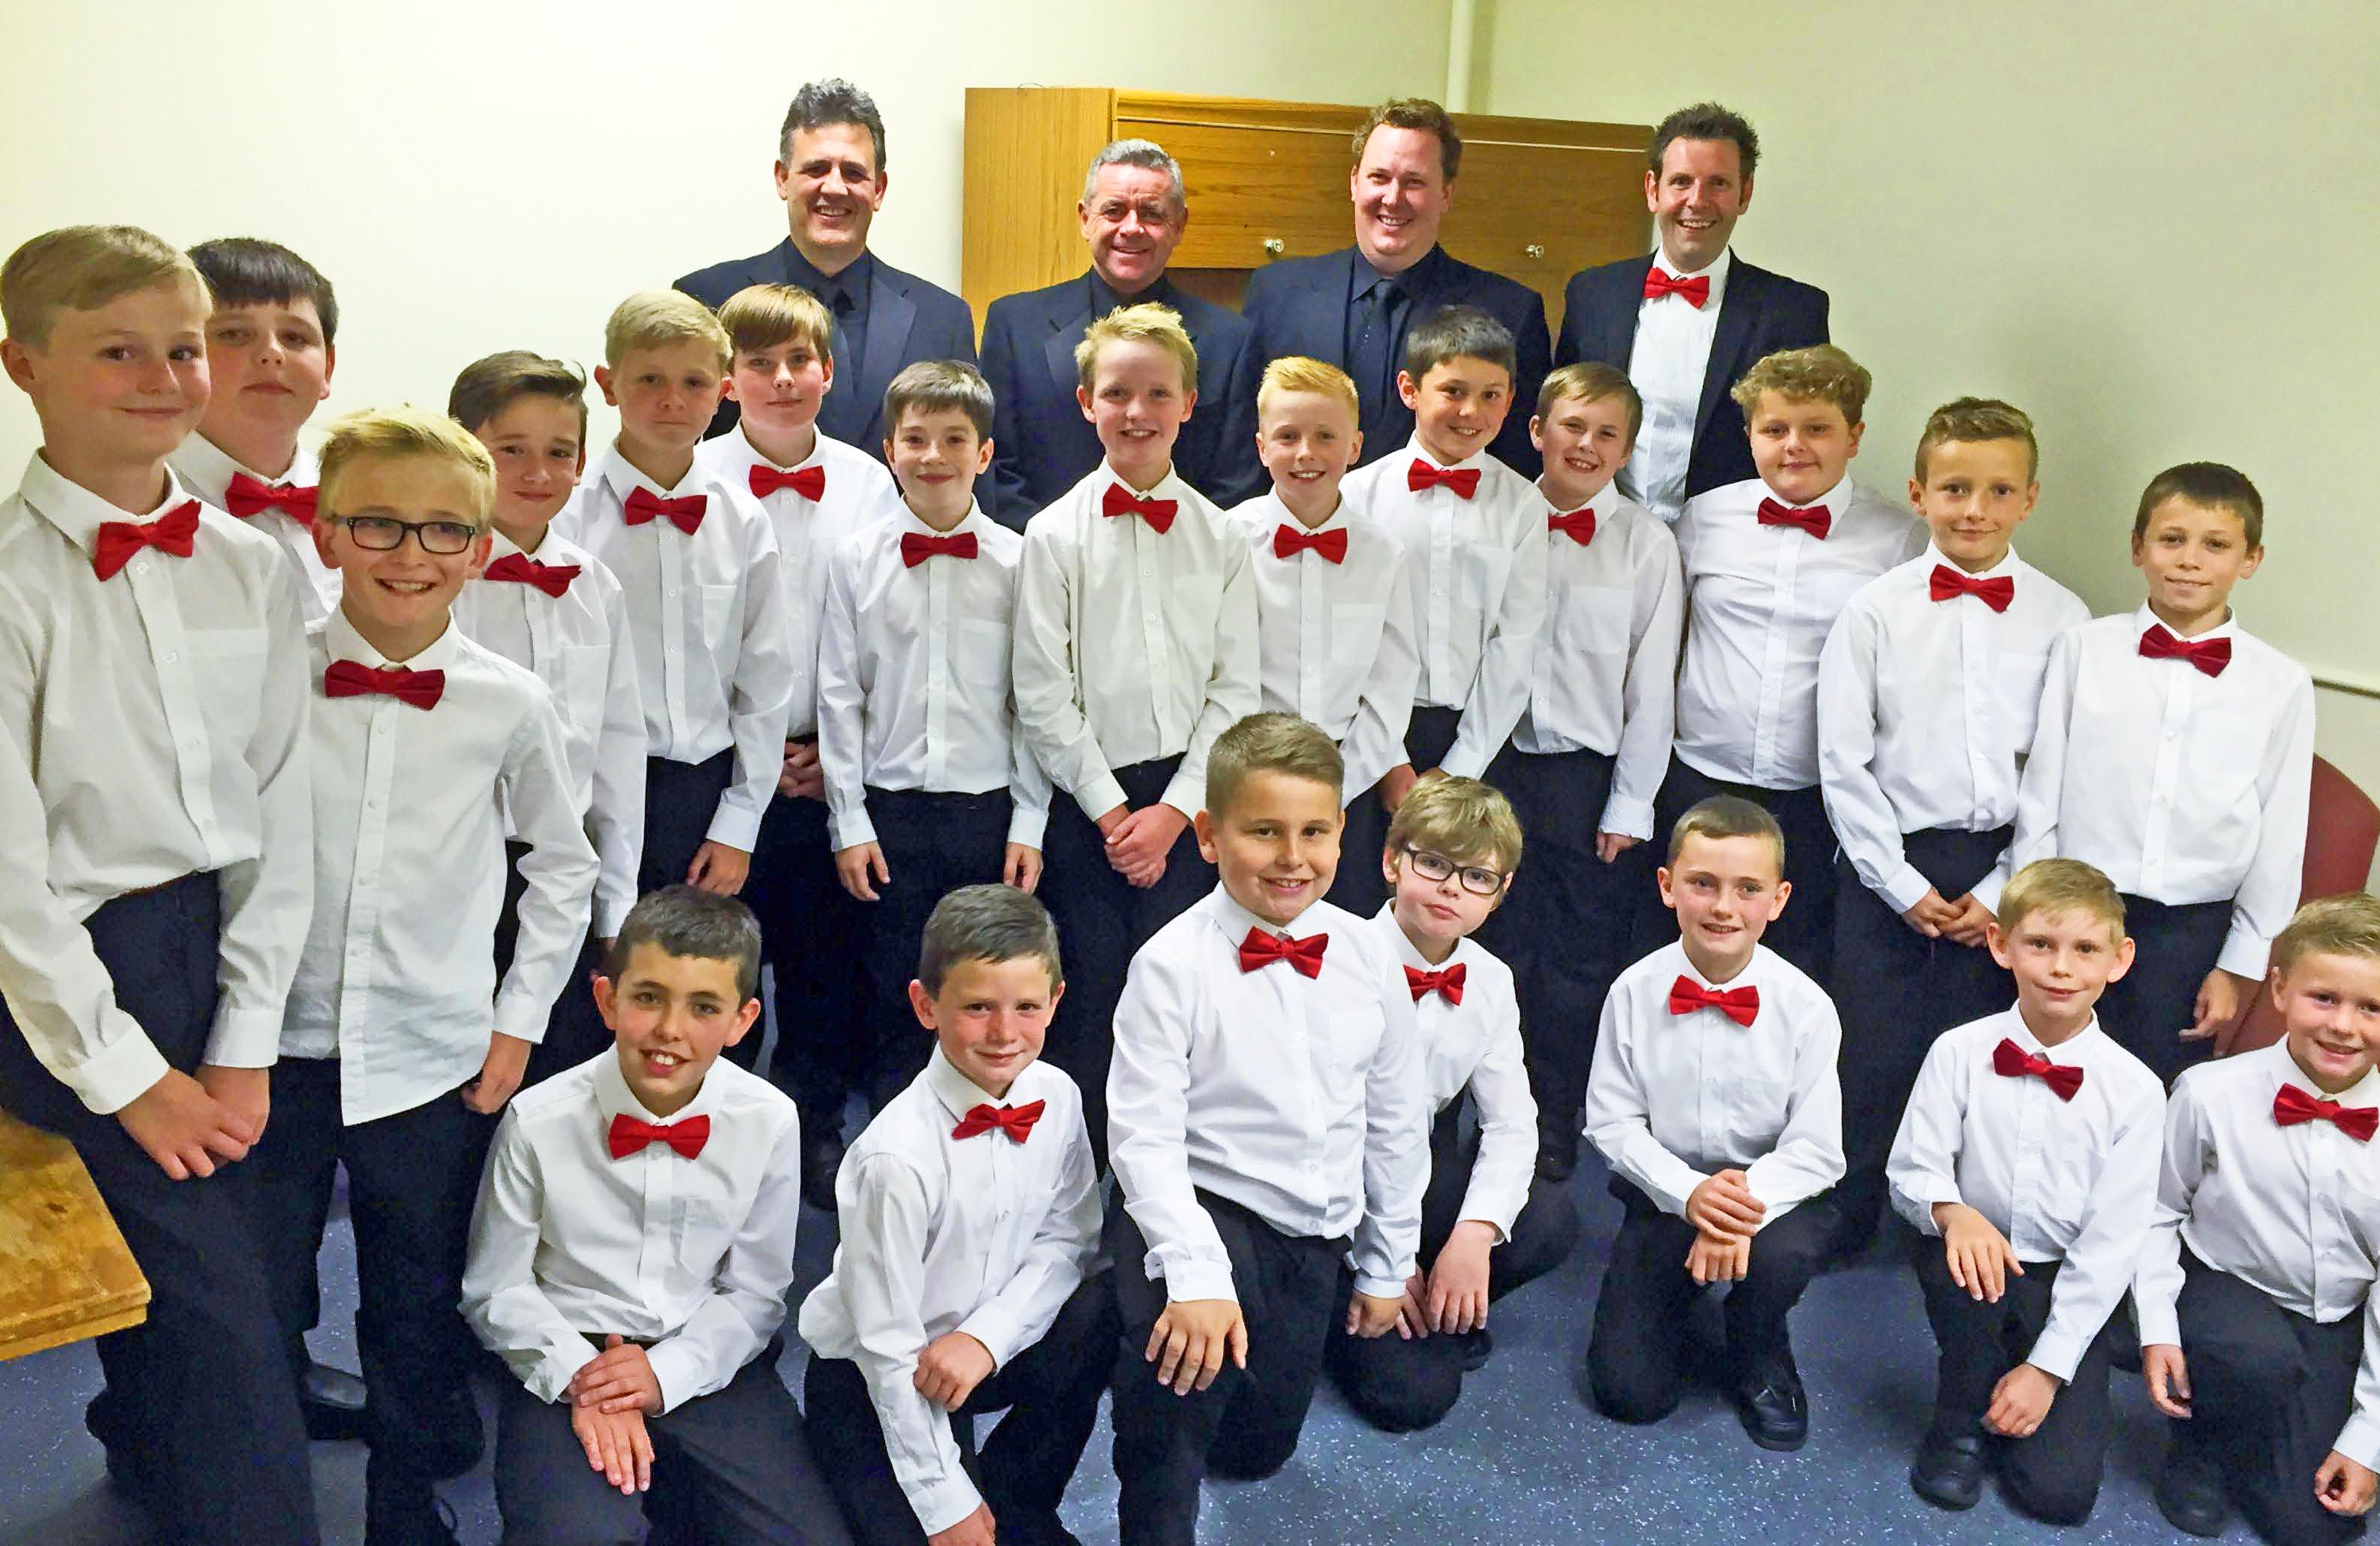 Boys’ choir returns to Pavilion stage for Eisteddfod’s Christmas concert